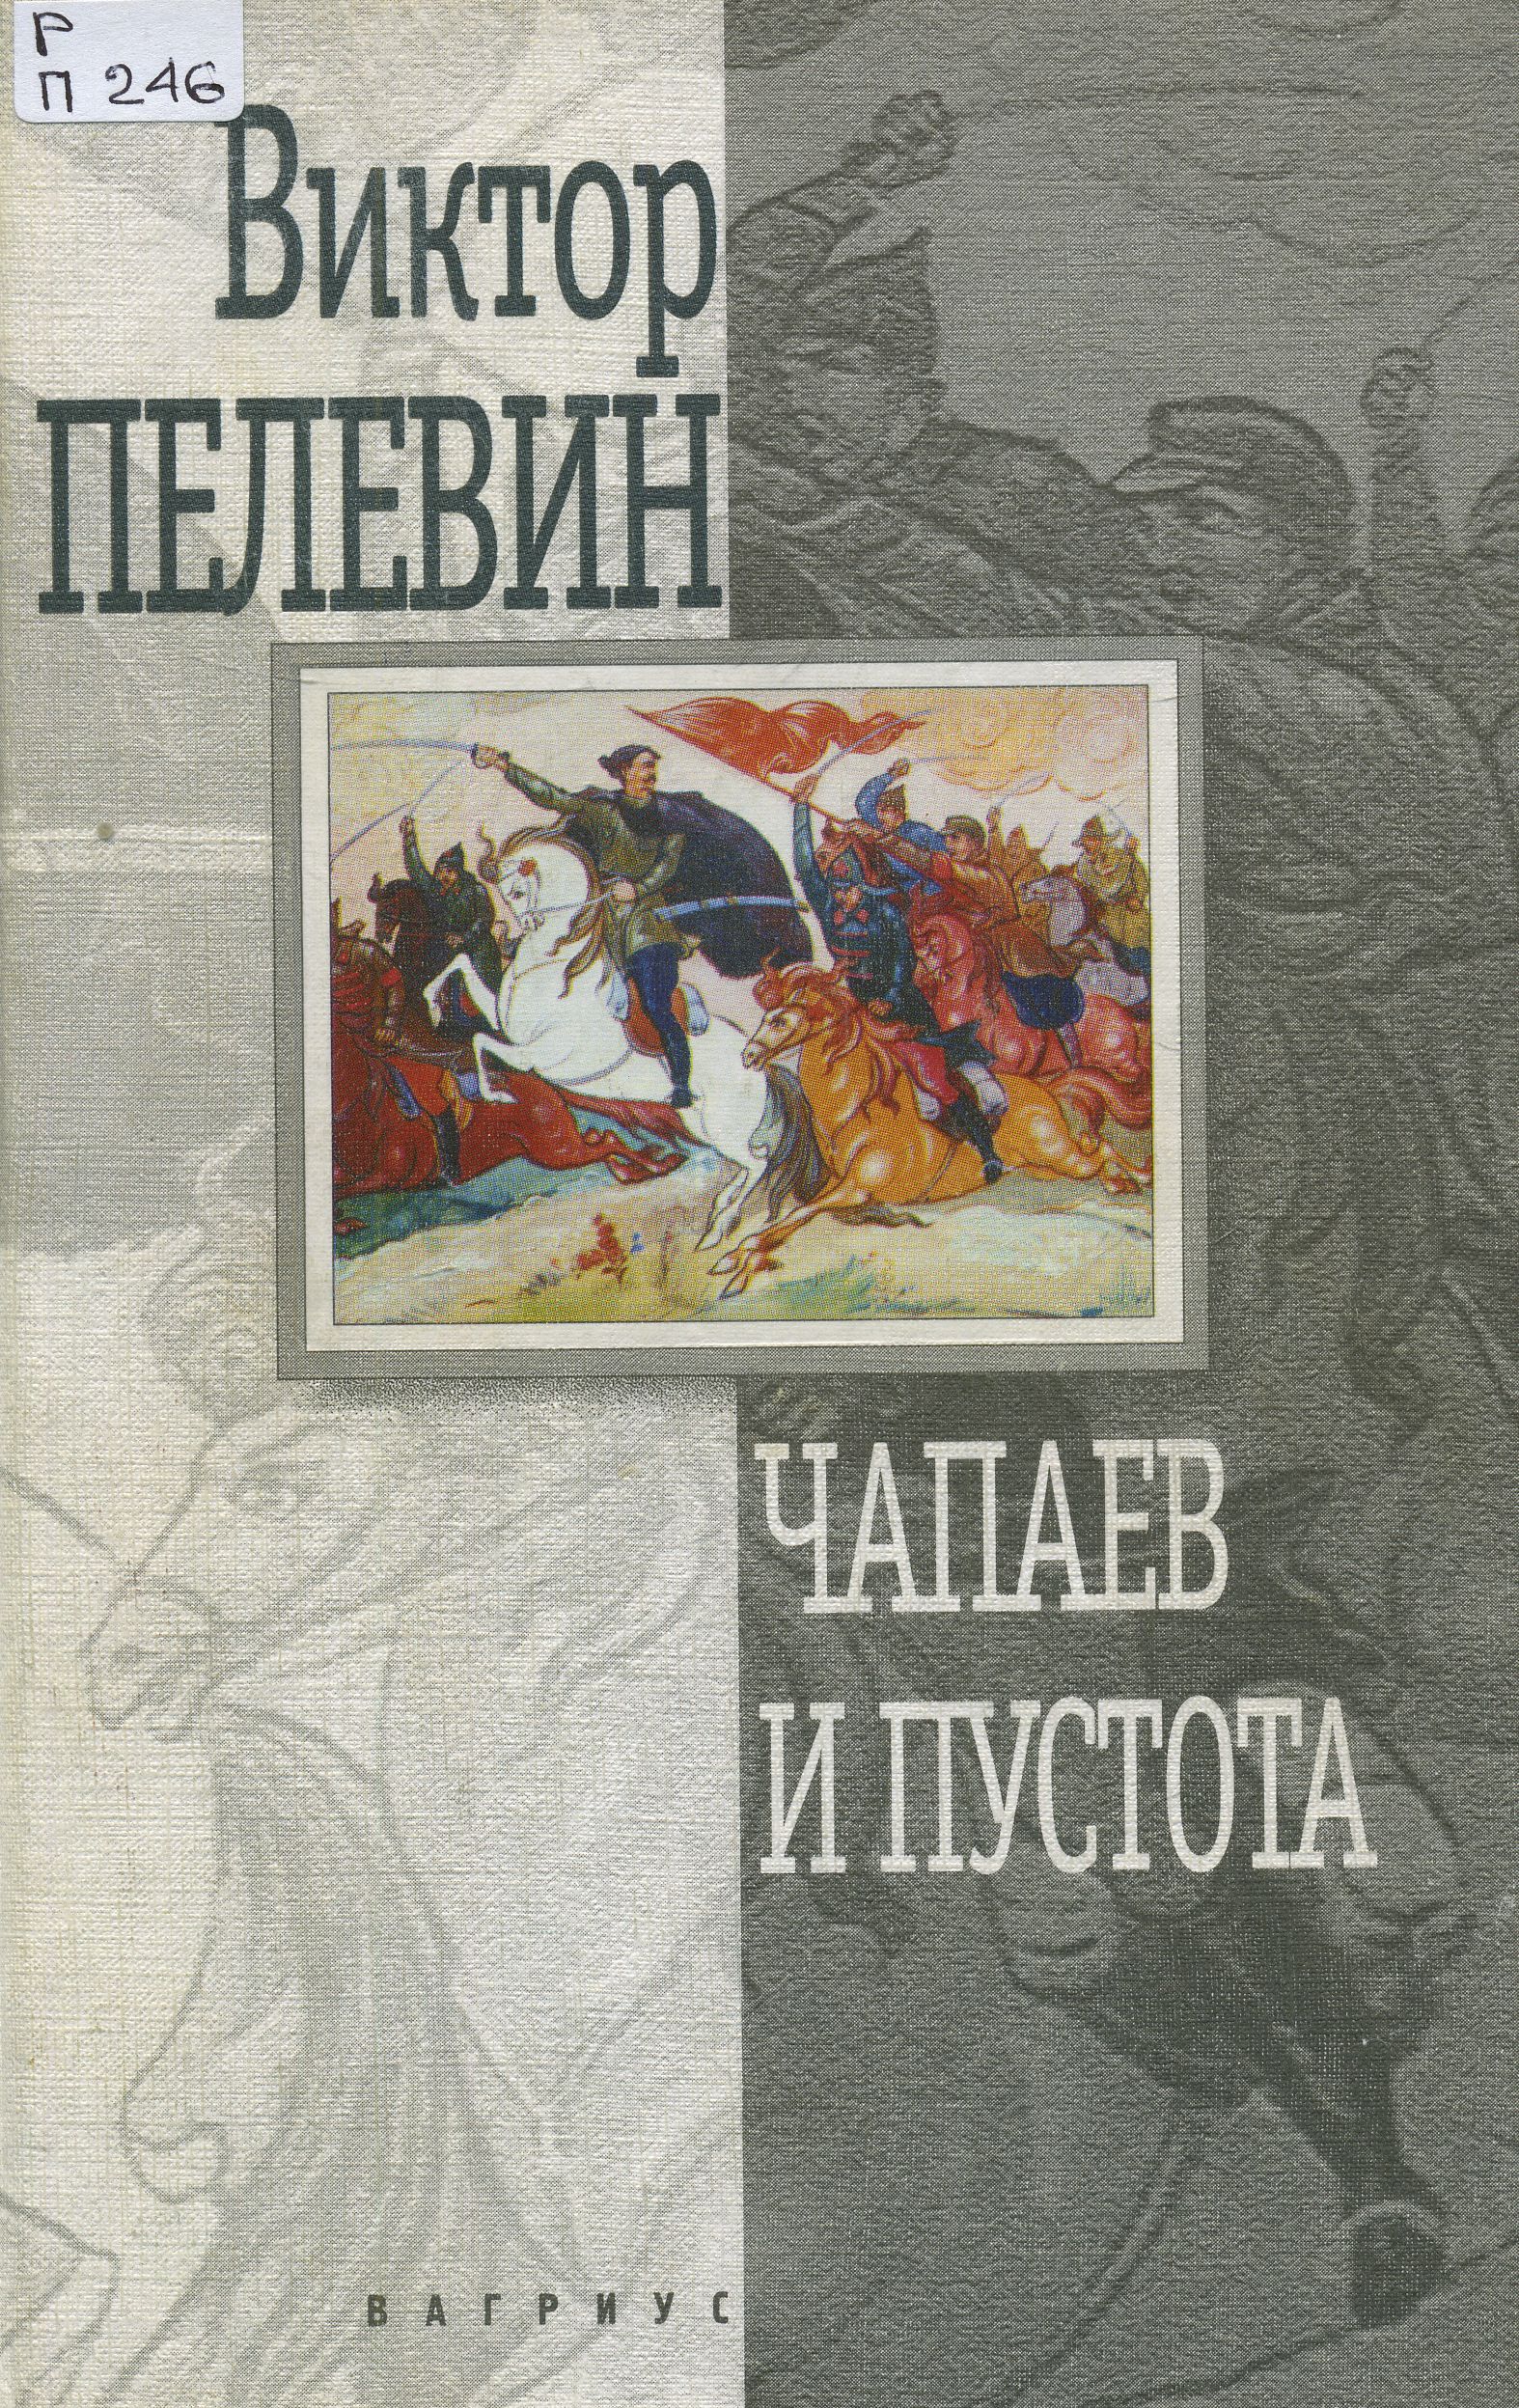 «Чапаев и пустота» Виктора Пелевина (1996).